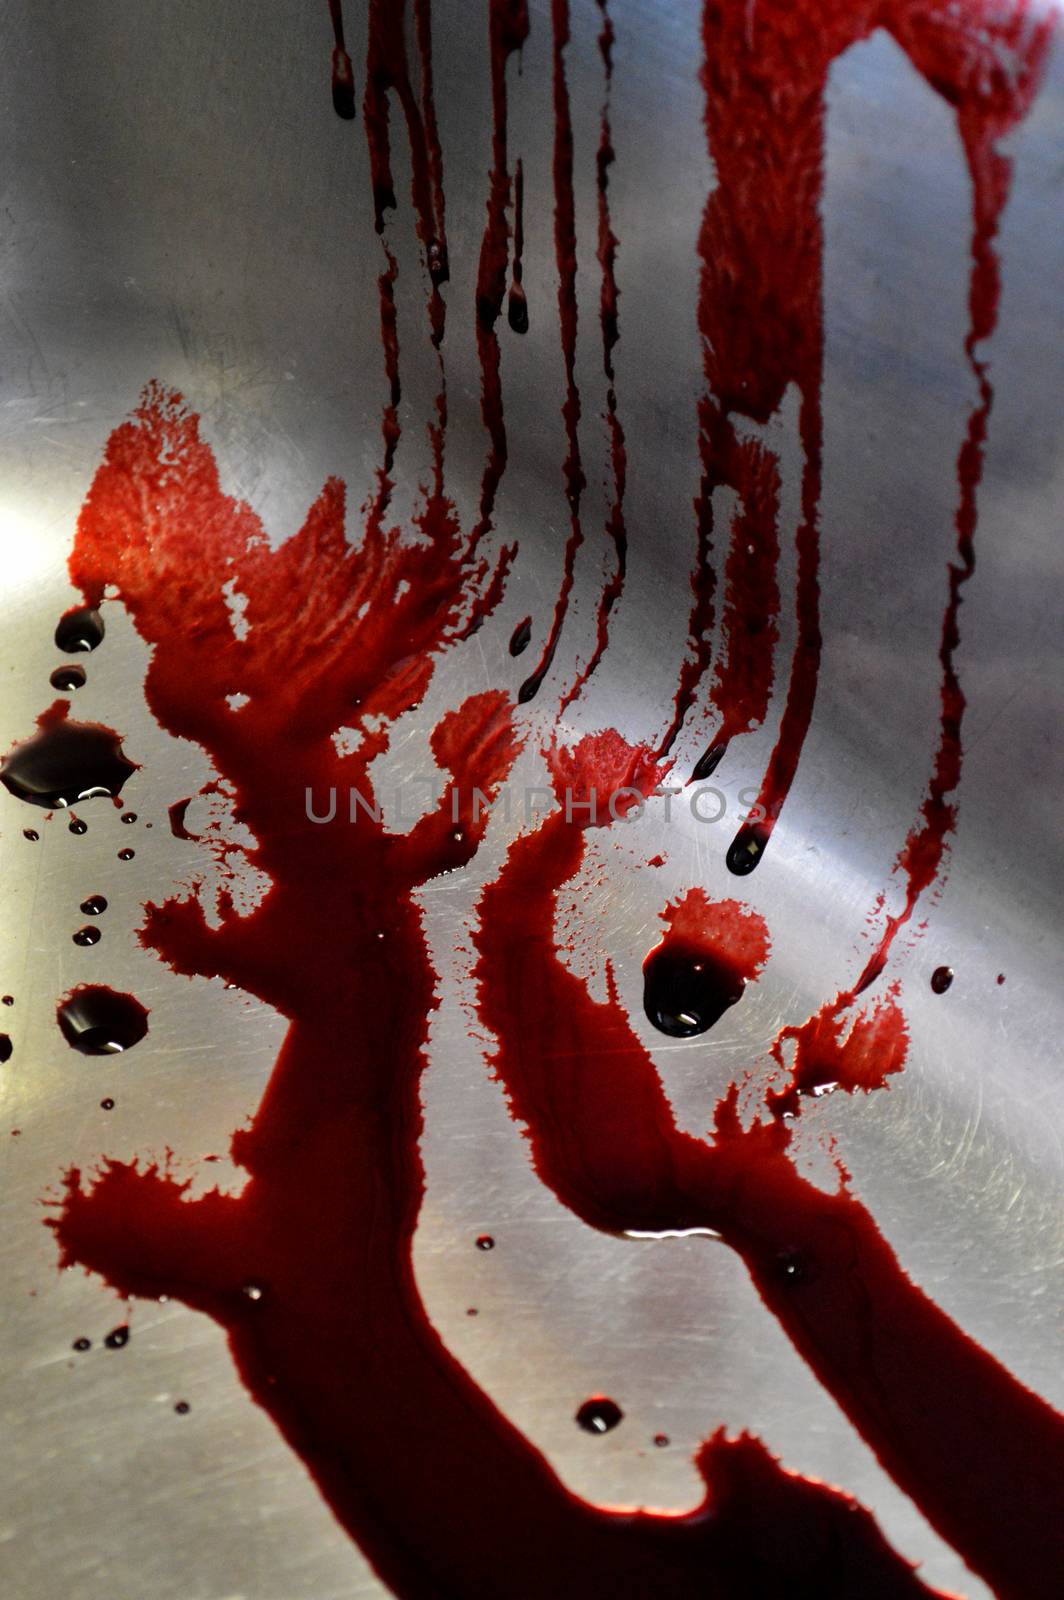 Illustration photo - Blood splatter.